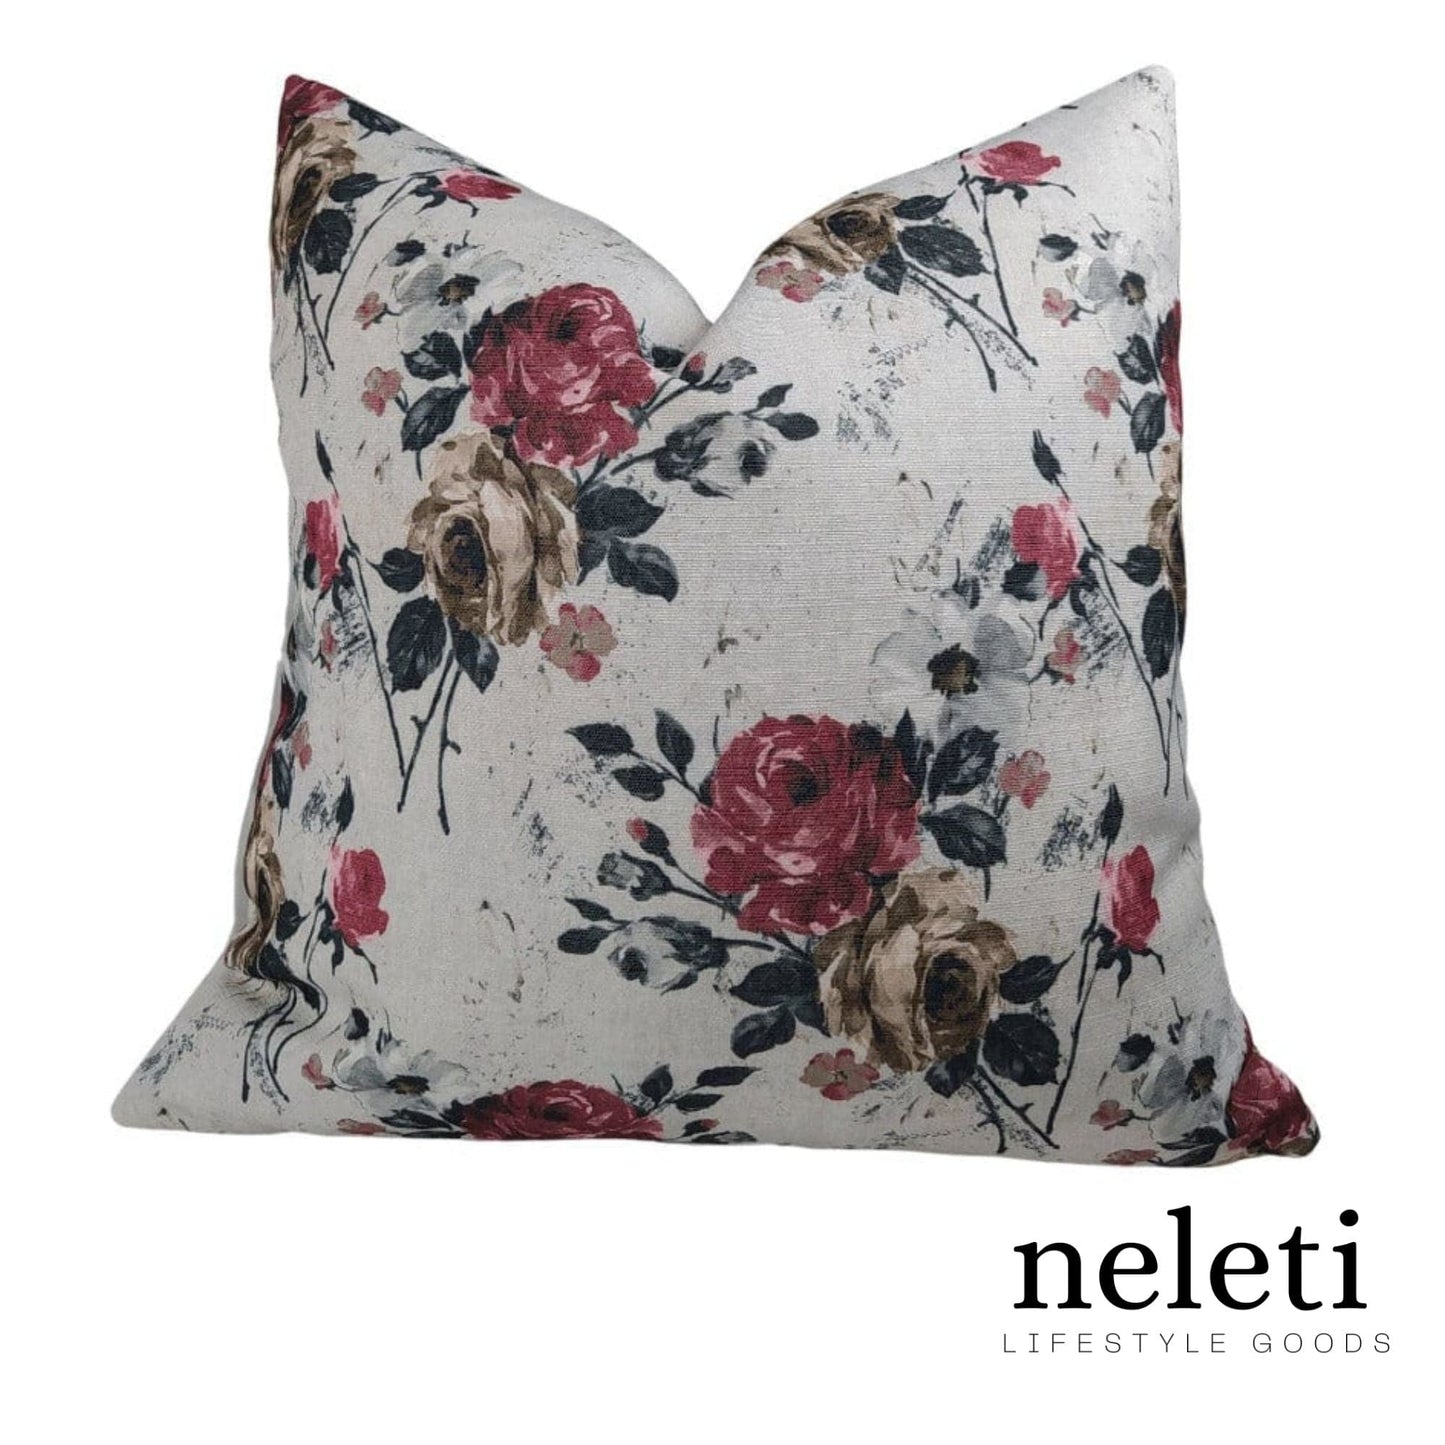 neleti.com-vintage-roses-grey-accent-pillow-cover